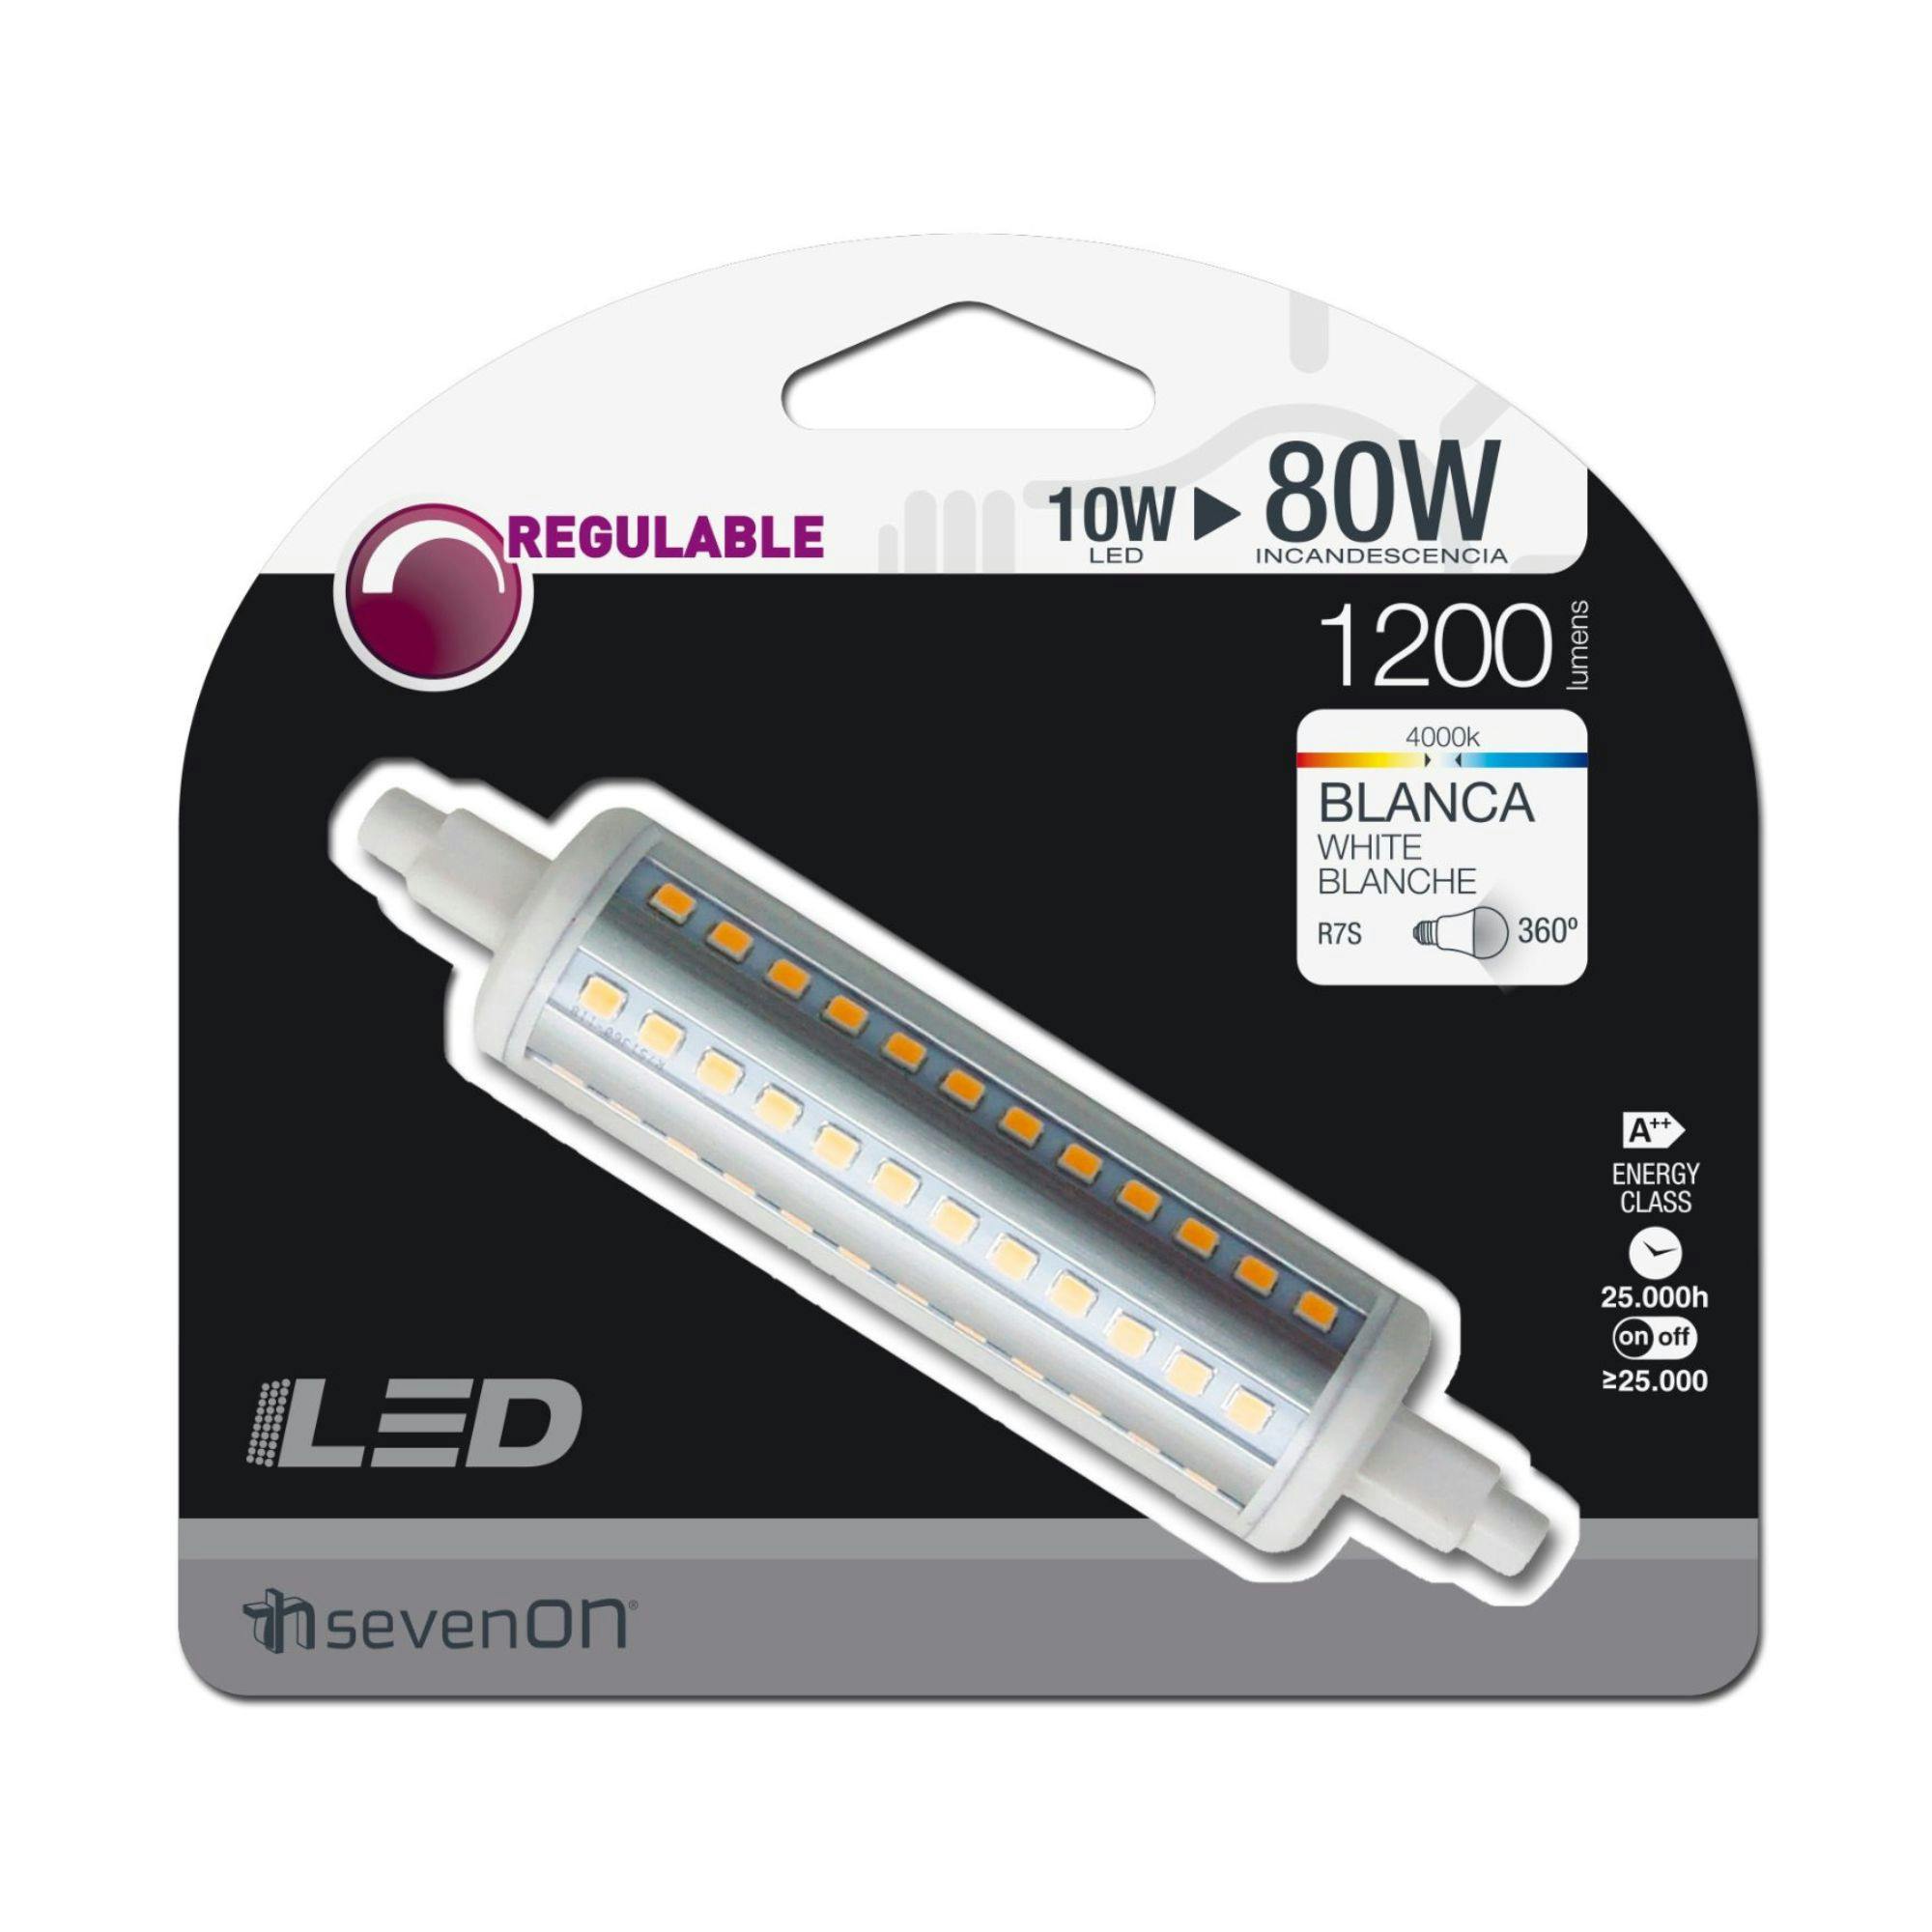 Lampadina Tubo LED R7S 10W Equi.80W 1200lm Dimmerabile 4000K 25000H  7hSevenOn